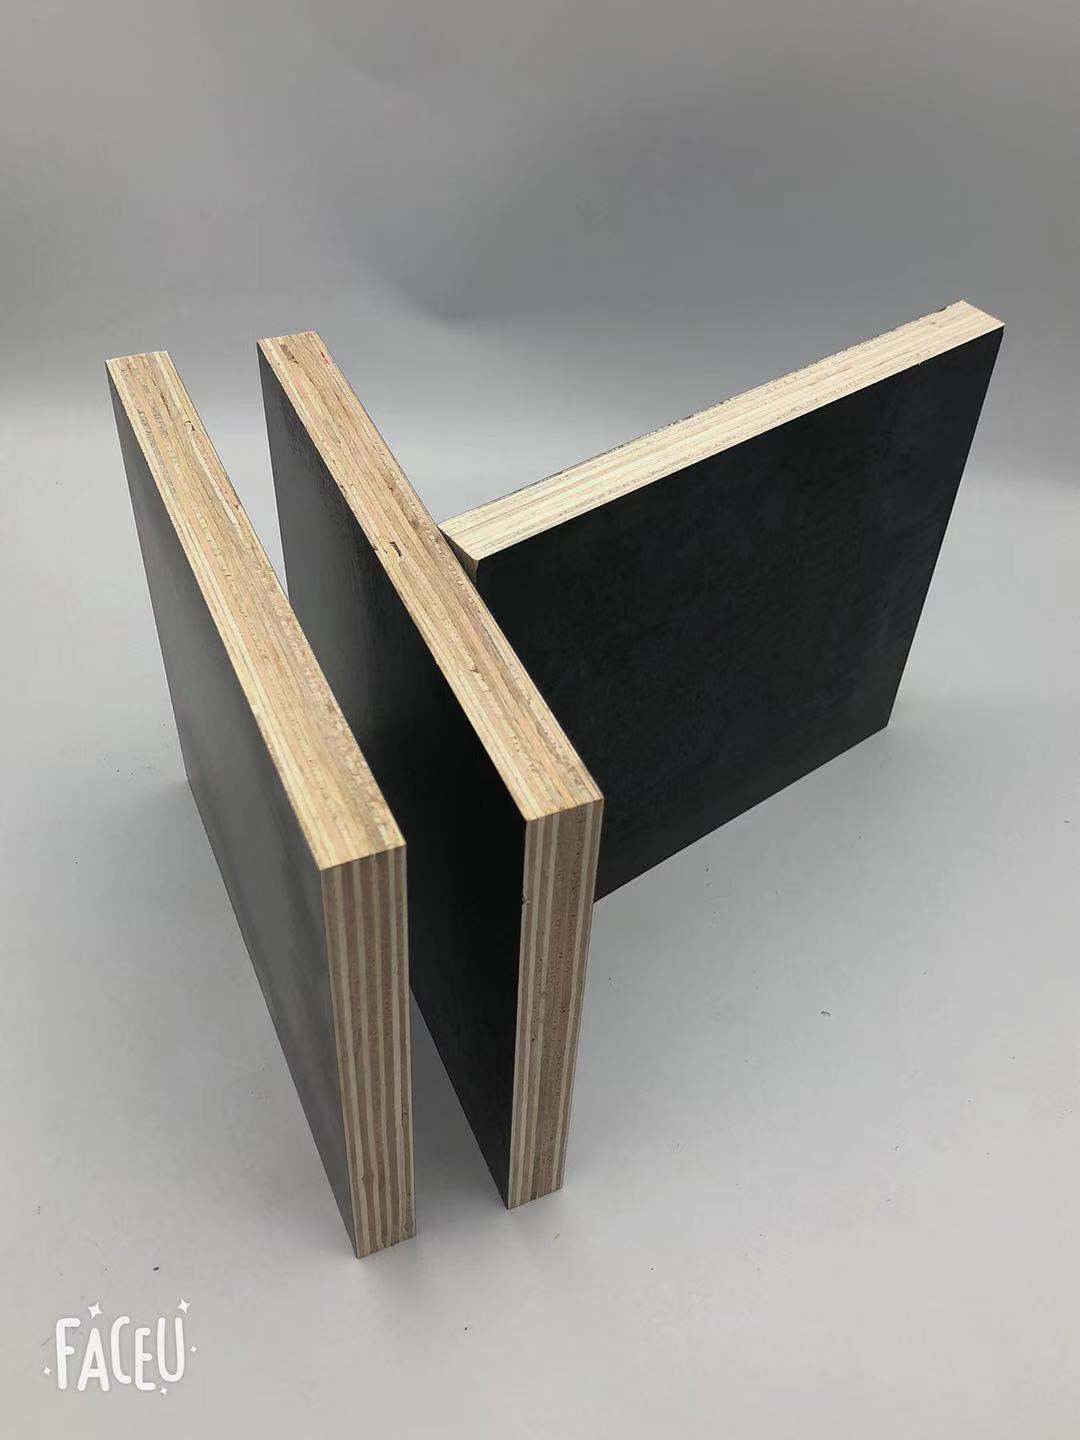 4X8 Cheap Black Film Faced Poplar Plywood for Construction